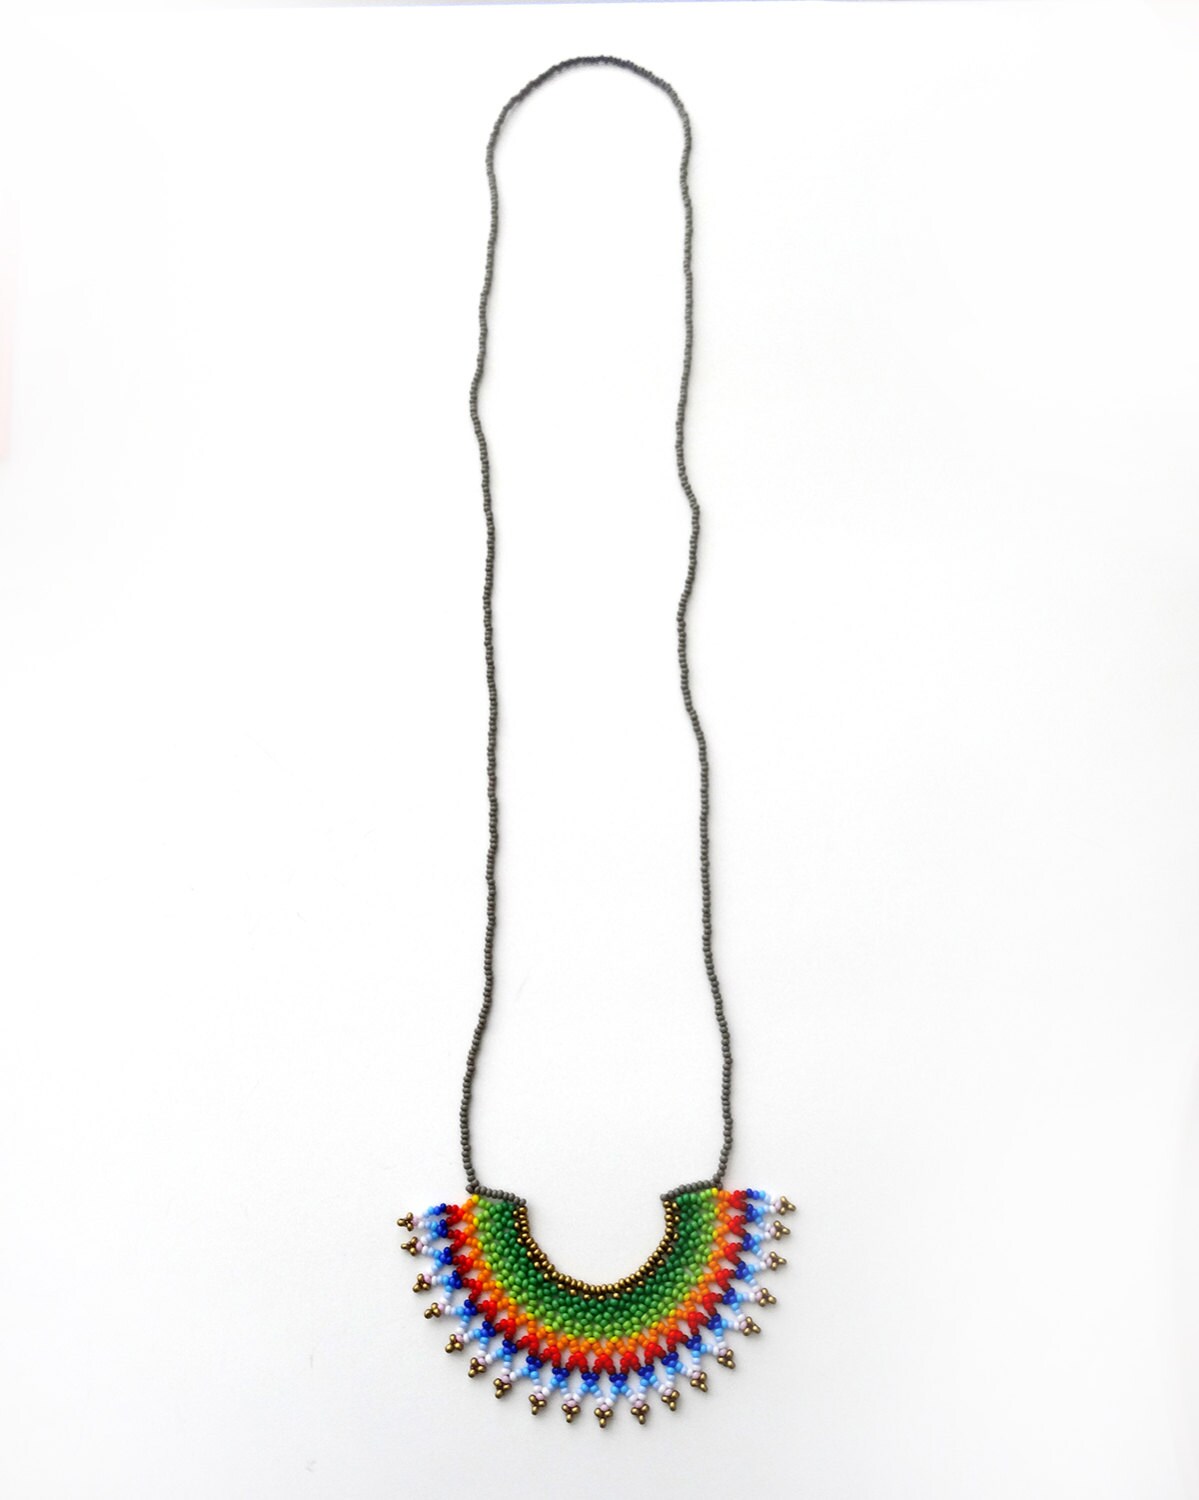 Peyote beaded Green Rainbow Mexican HALF MOON Necklace